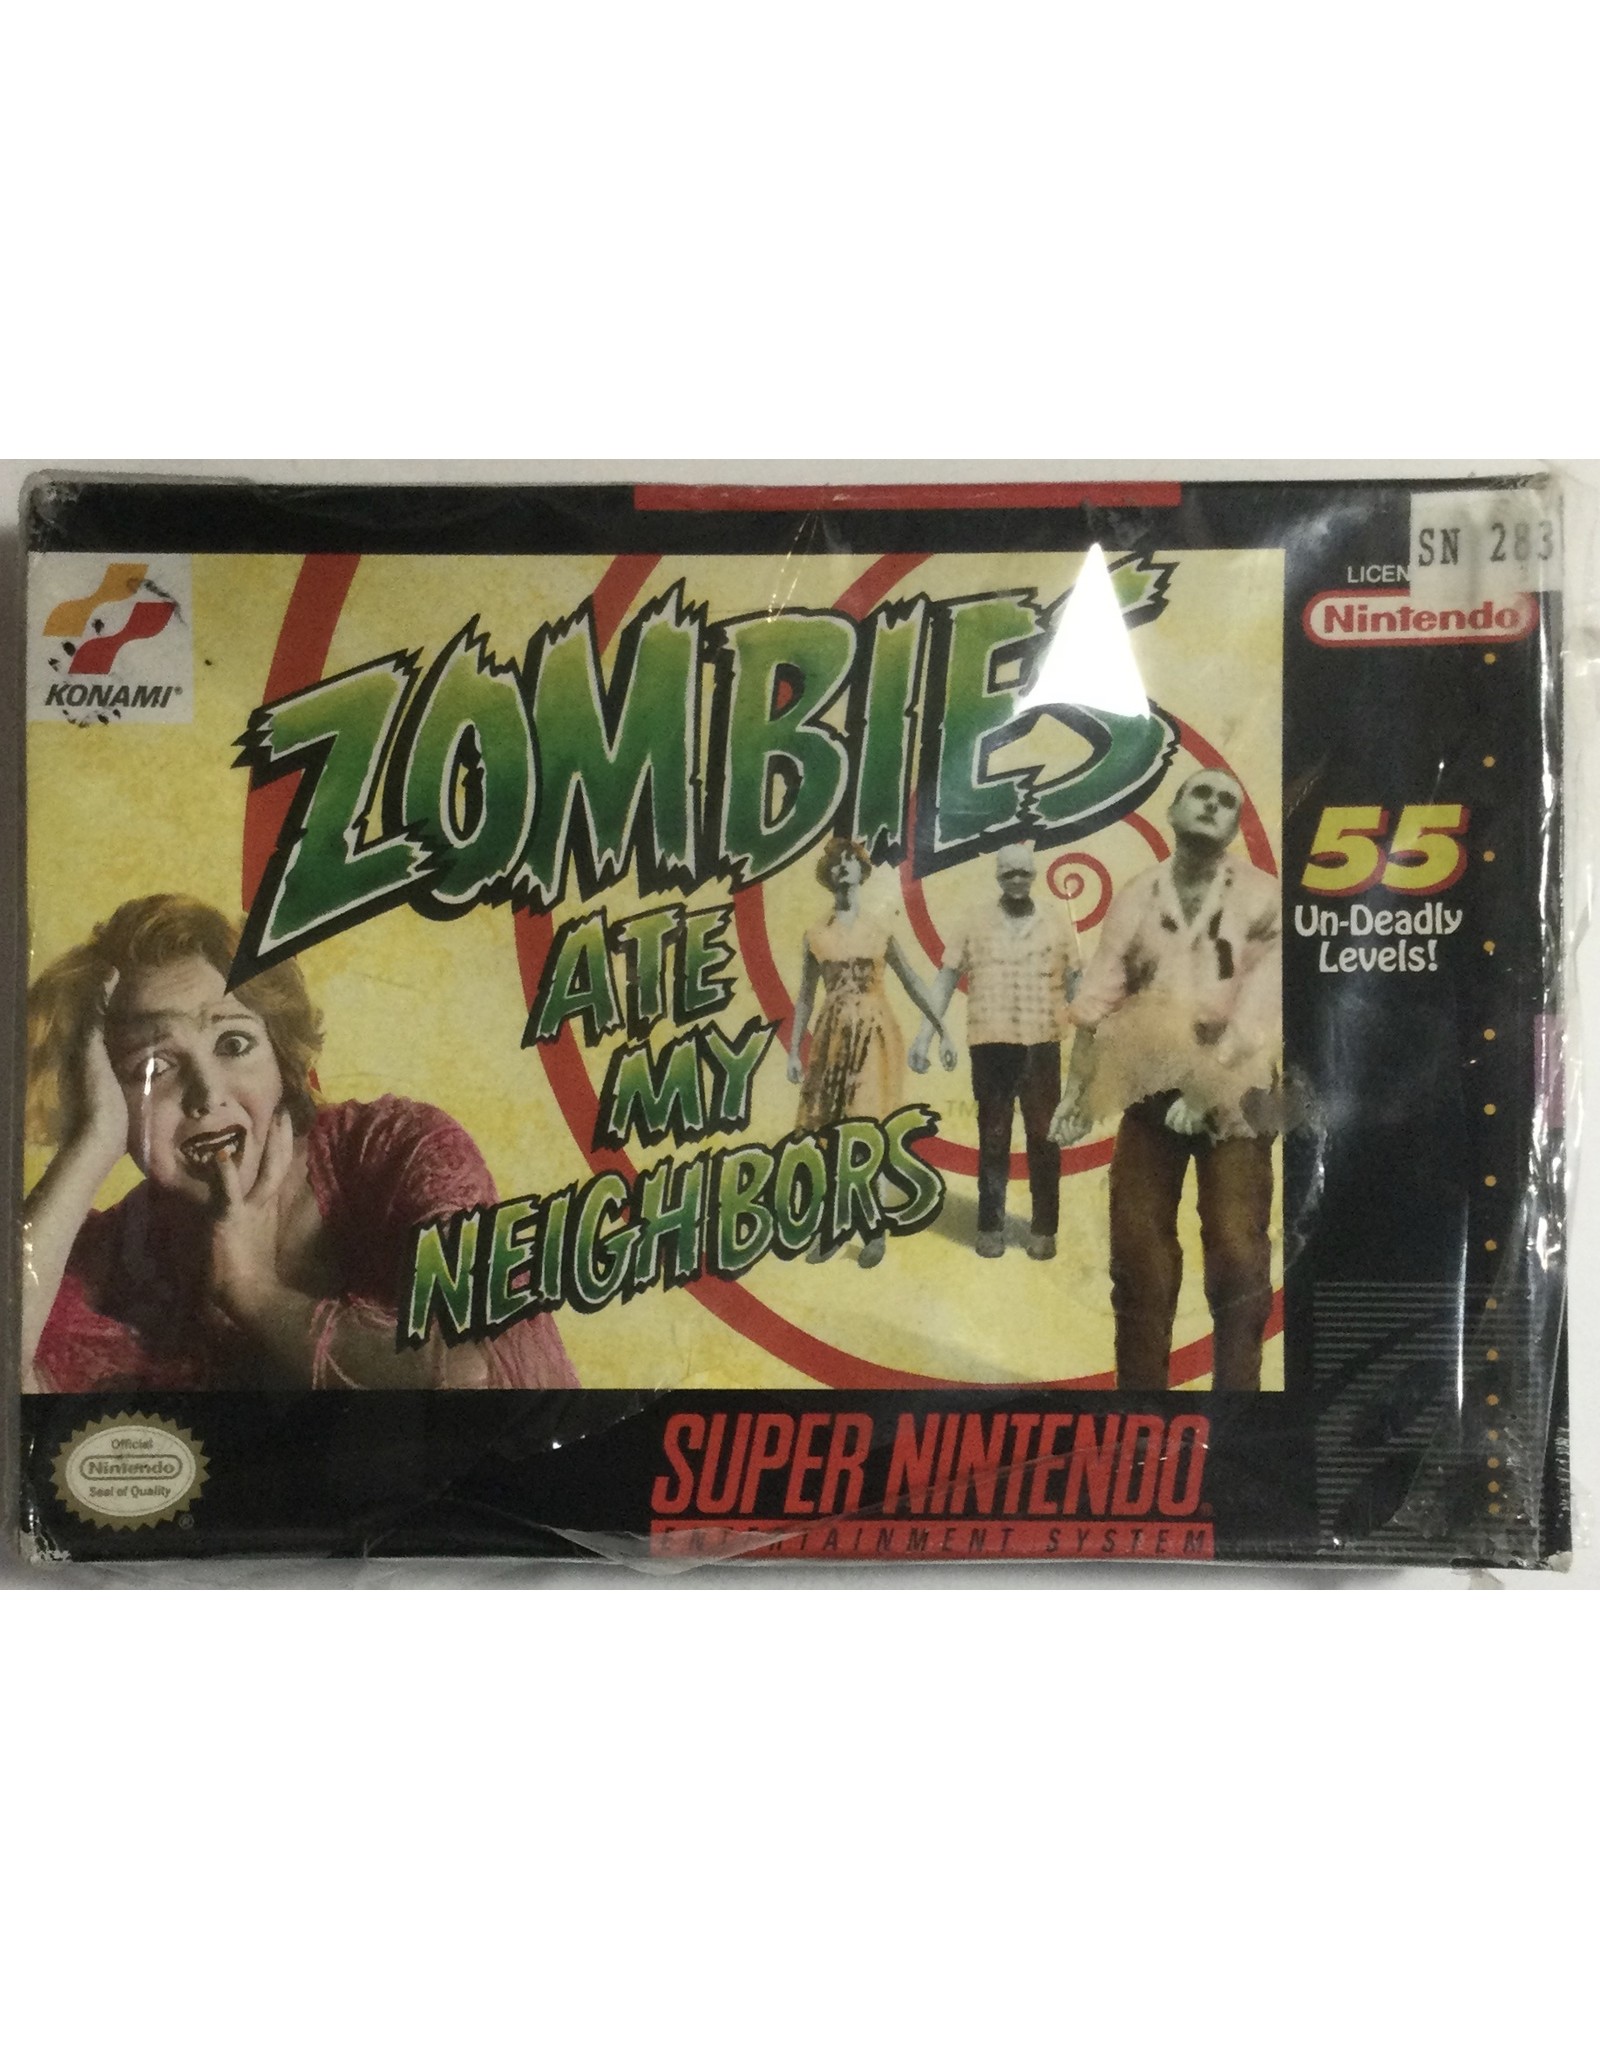 KONAMI Zombies Ate my Neighbors for Super Nintendo Entertainment System (SNES) - CIB